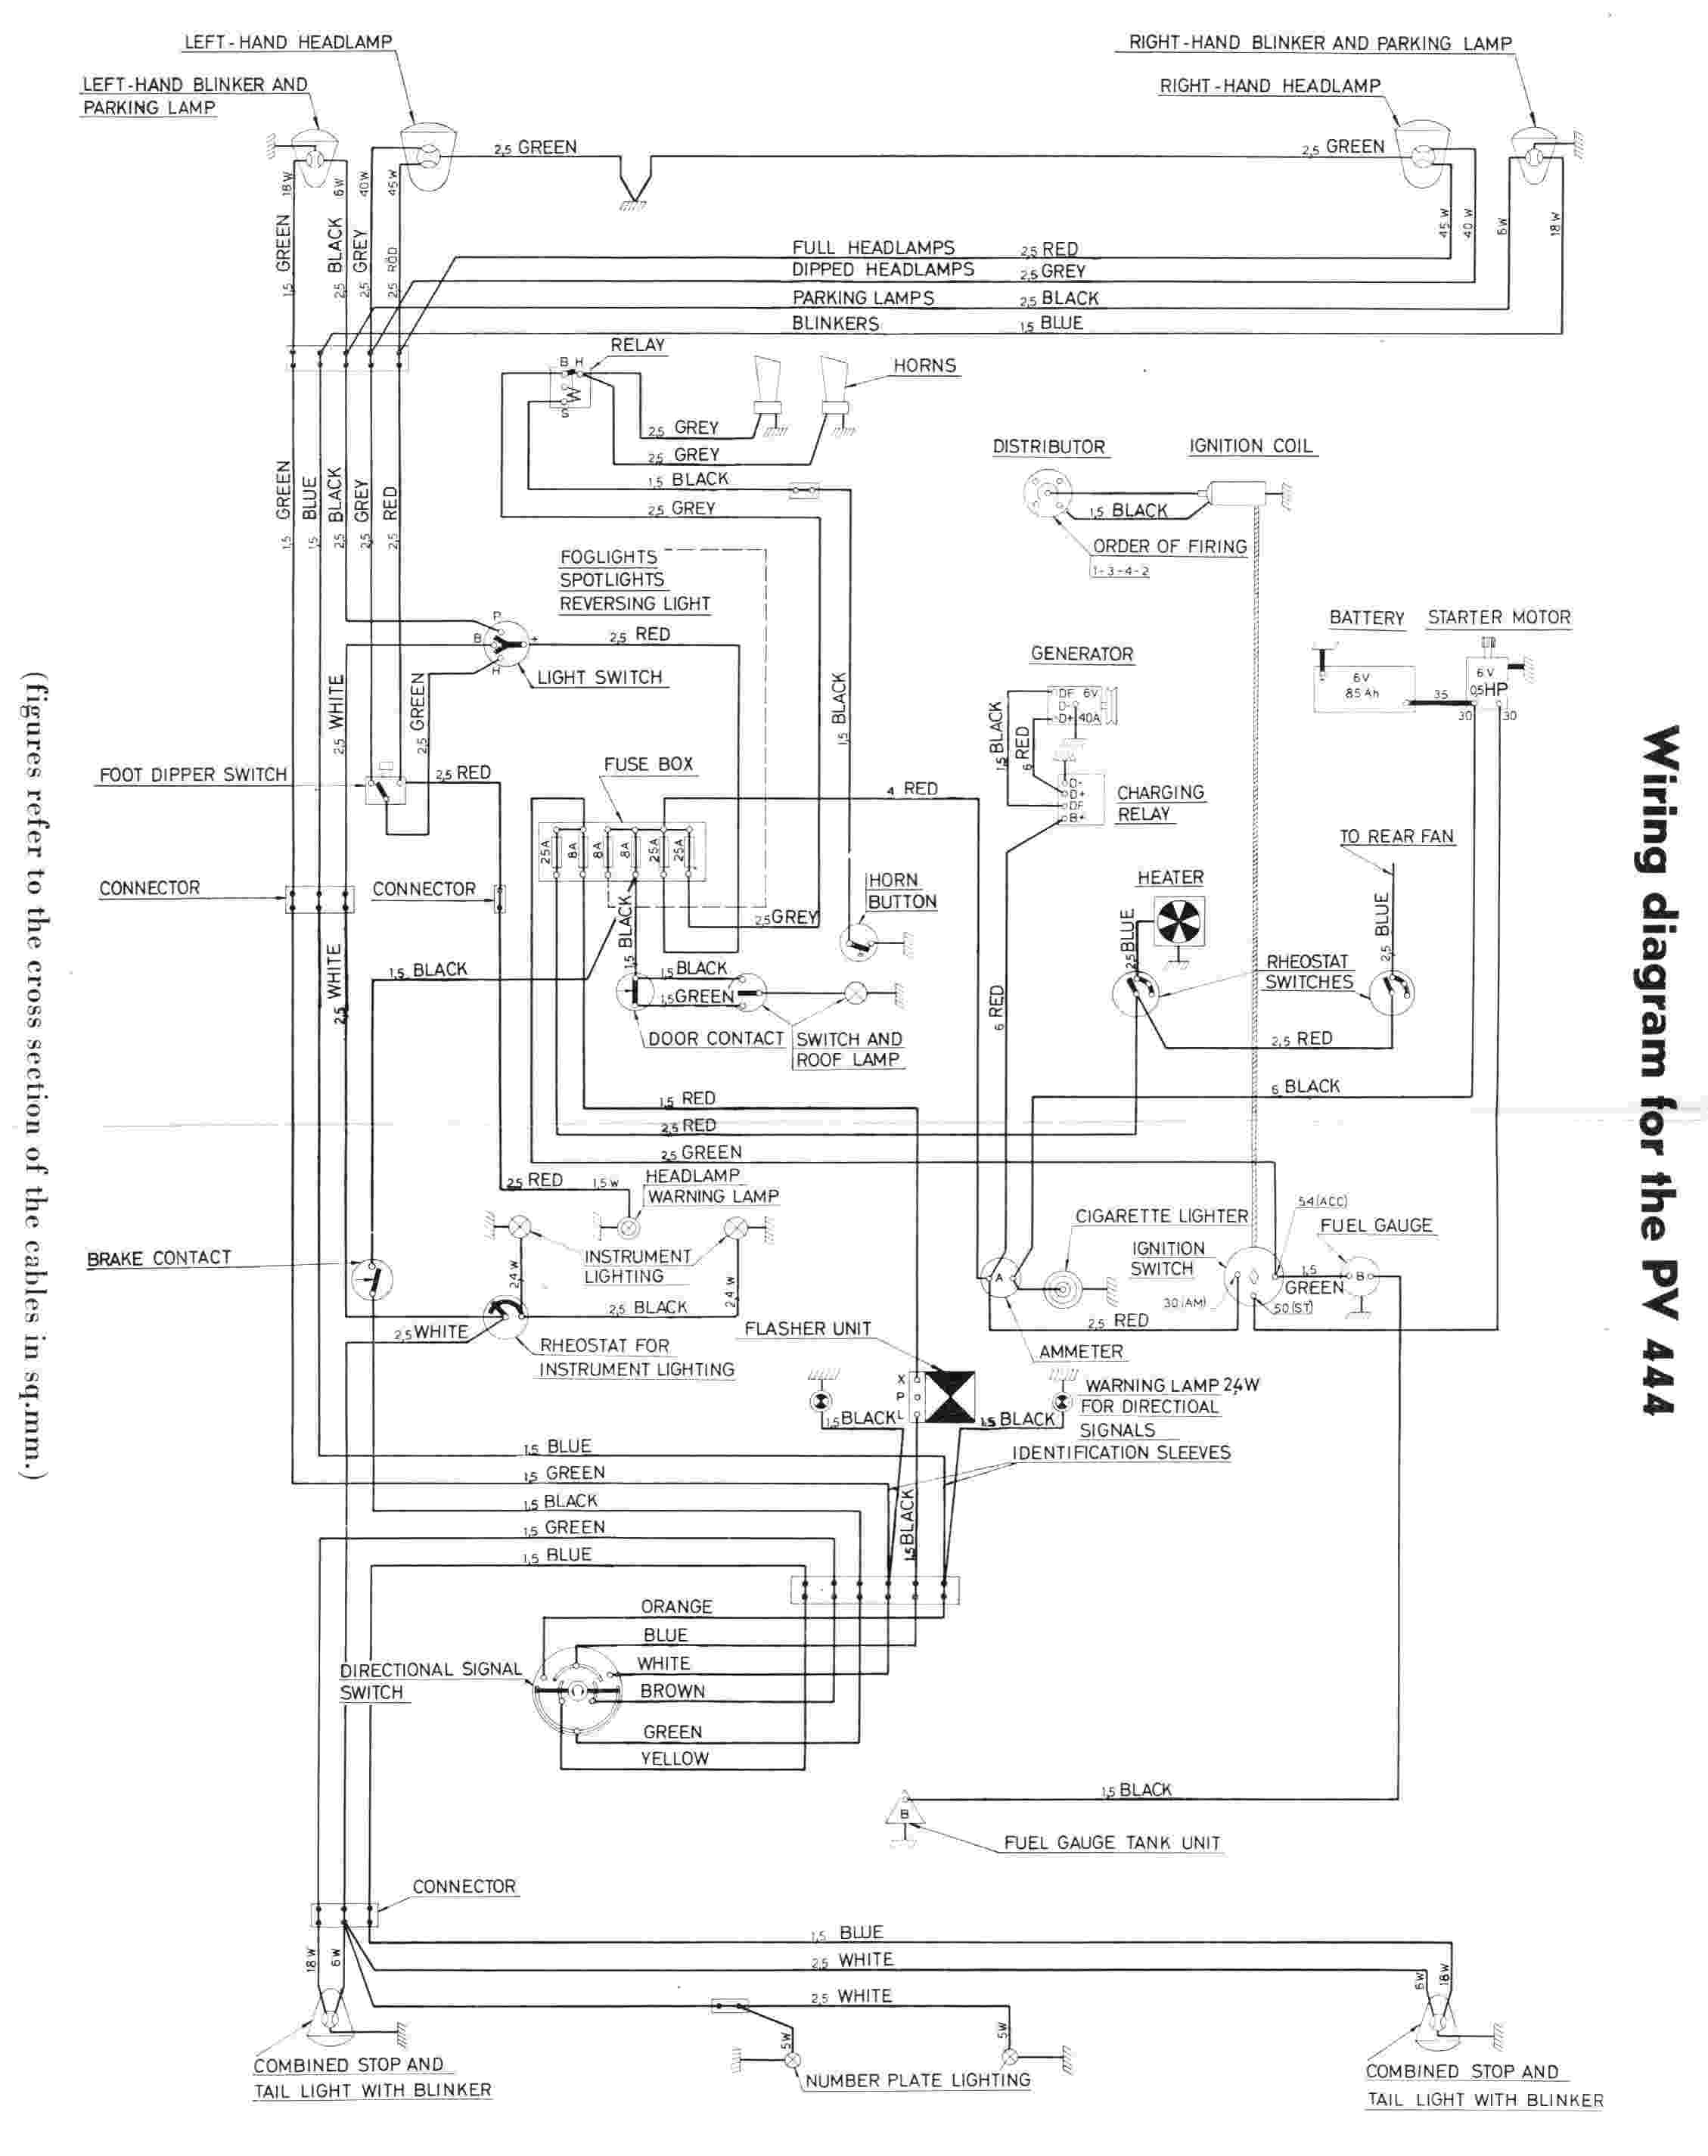 VOLVO - Car PDF Manual, Wiring Diagram & Fault Codes DTC  1999 Volvo Vnl Wiring Diagram    automotive-manuals.net